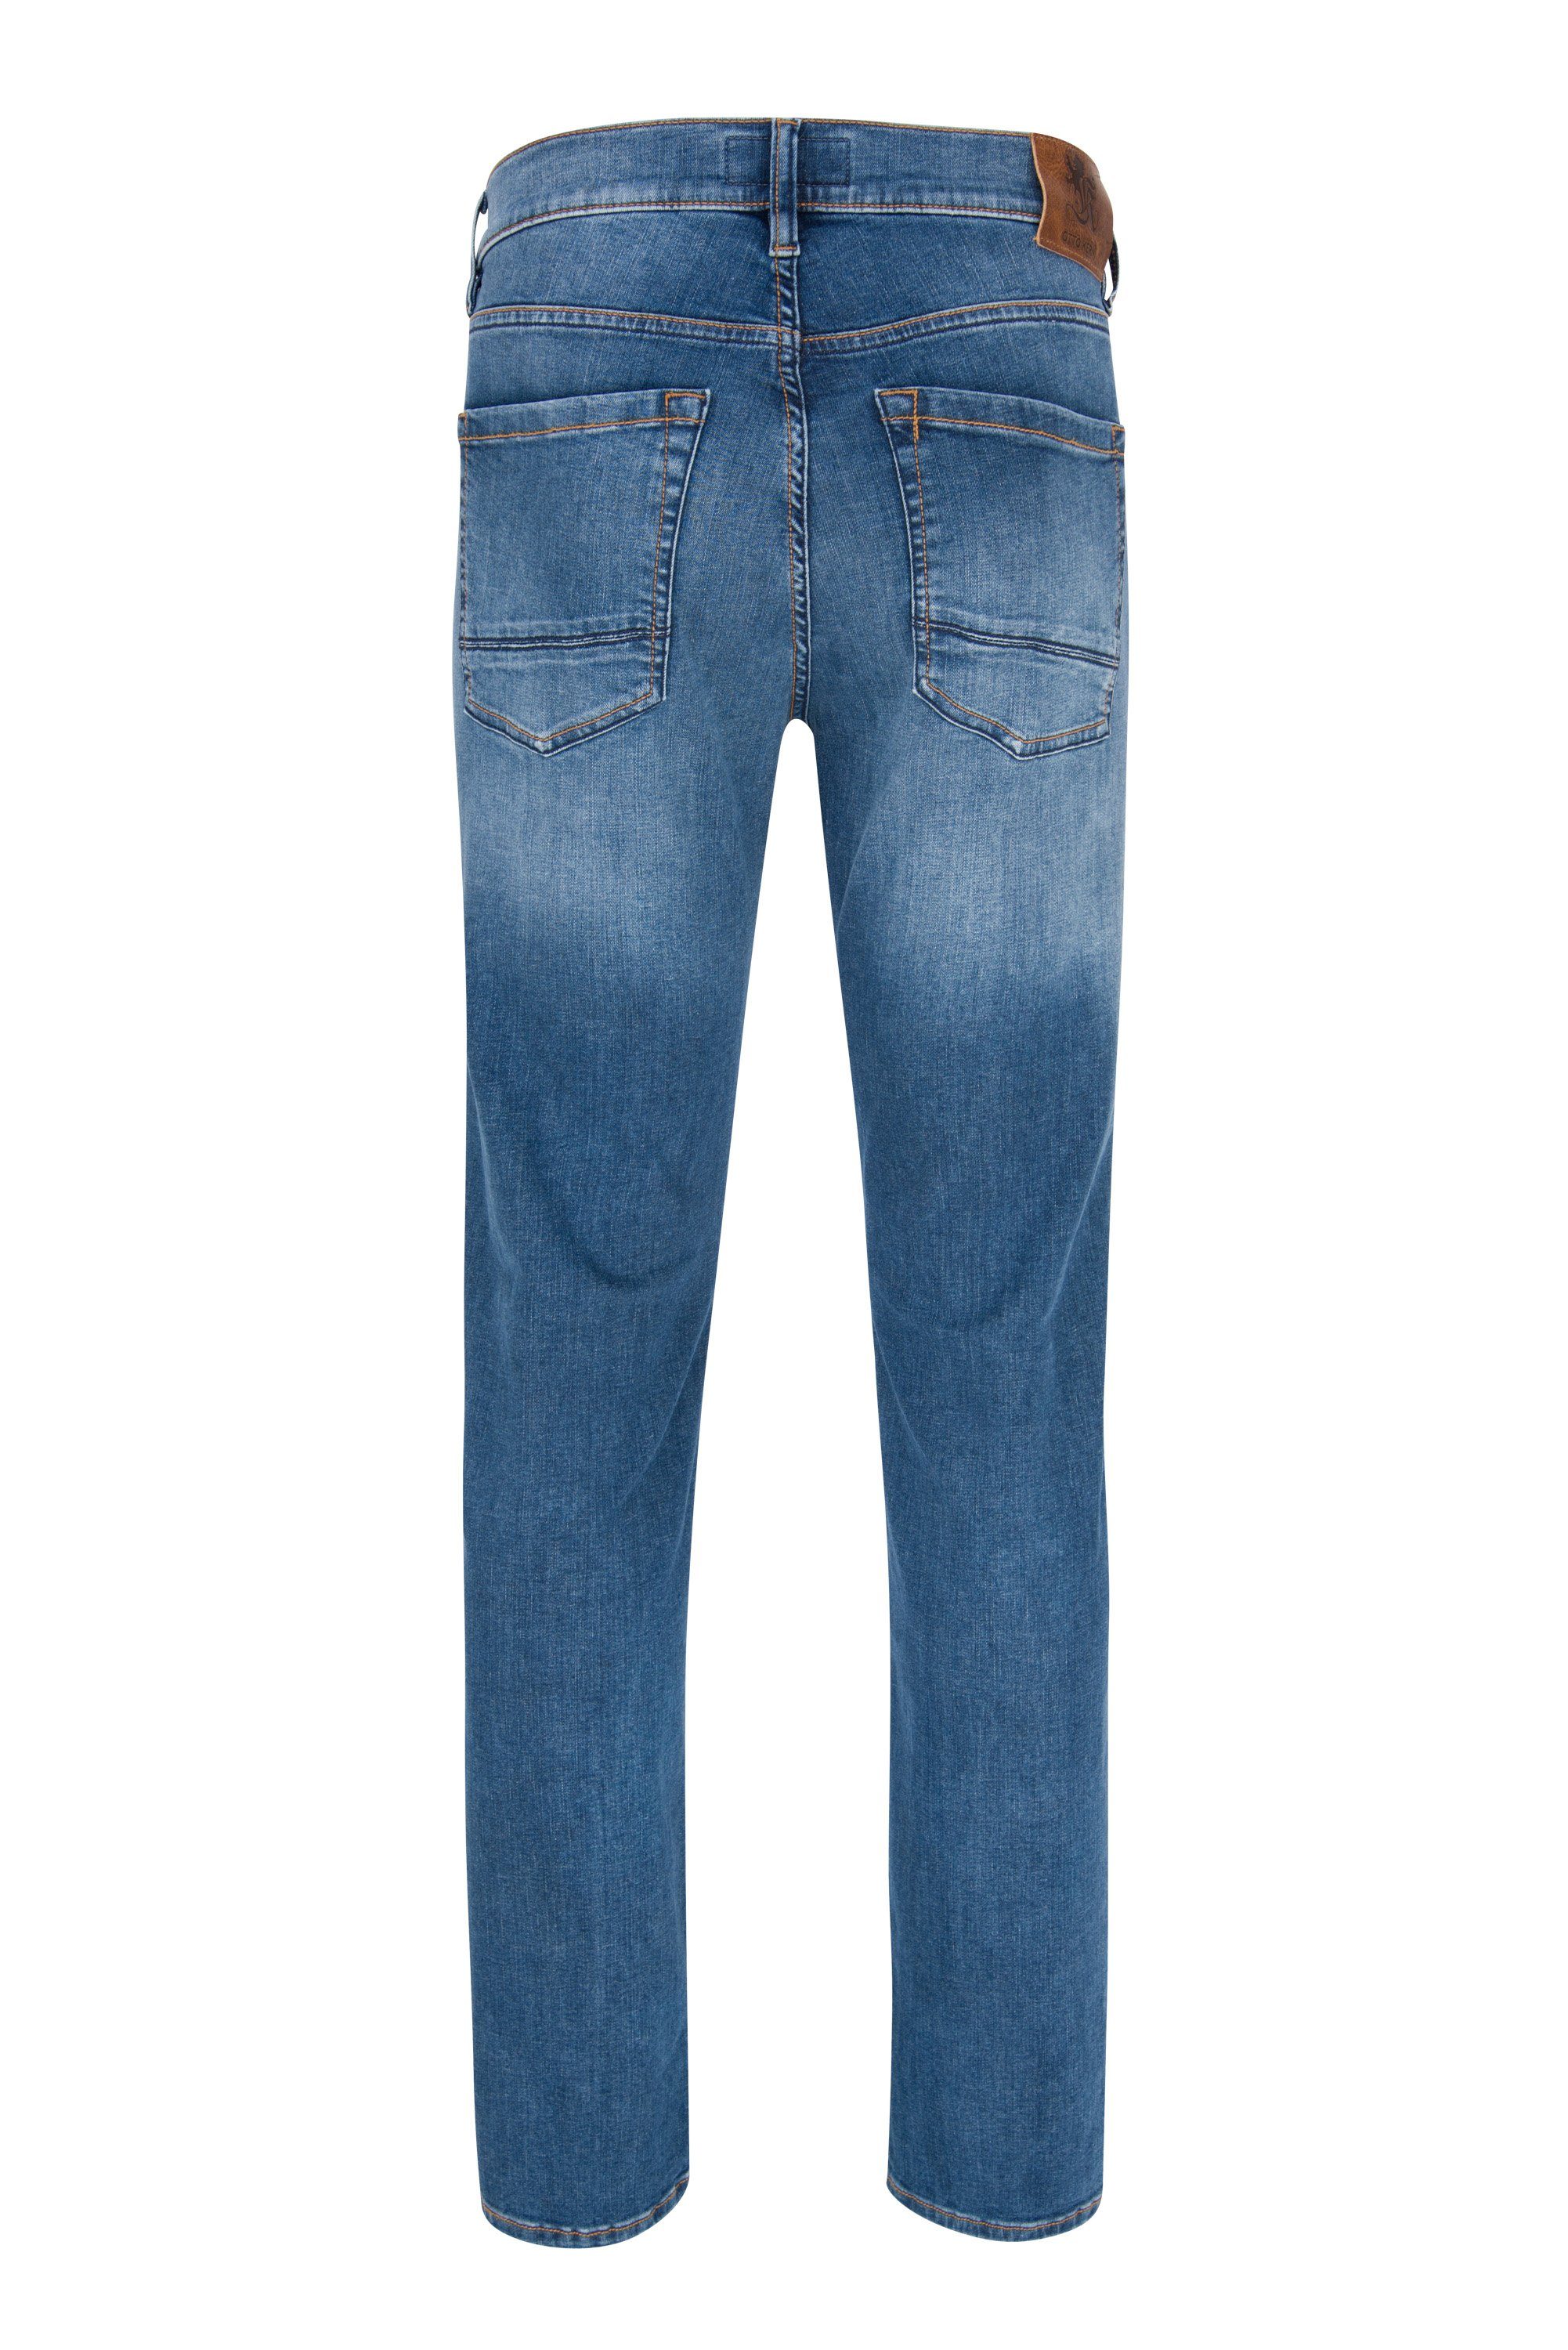 Kern 5-Pocket-Jeans OTTO 67001 JOHN buffies 6831.6824 blue used KERN